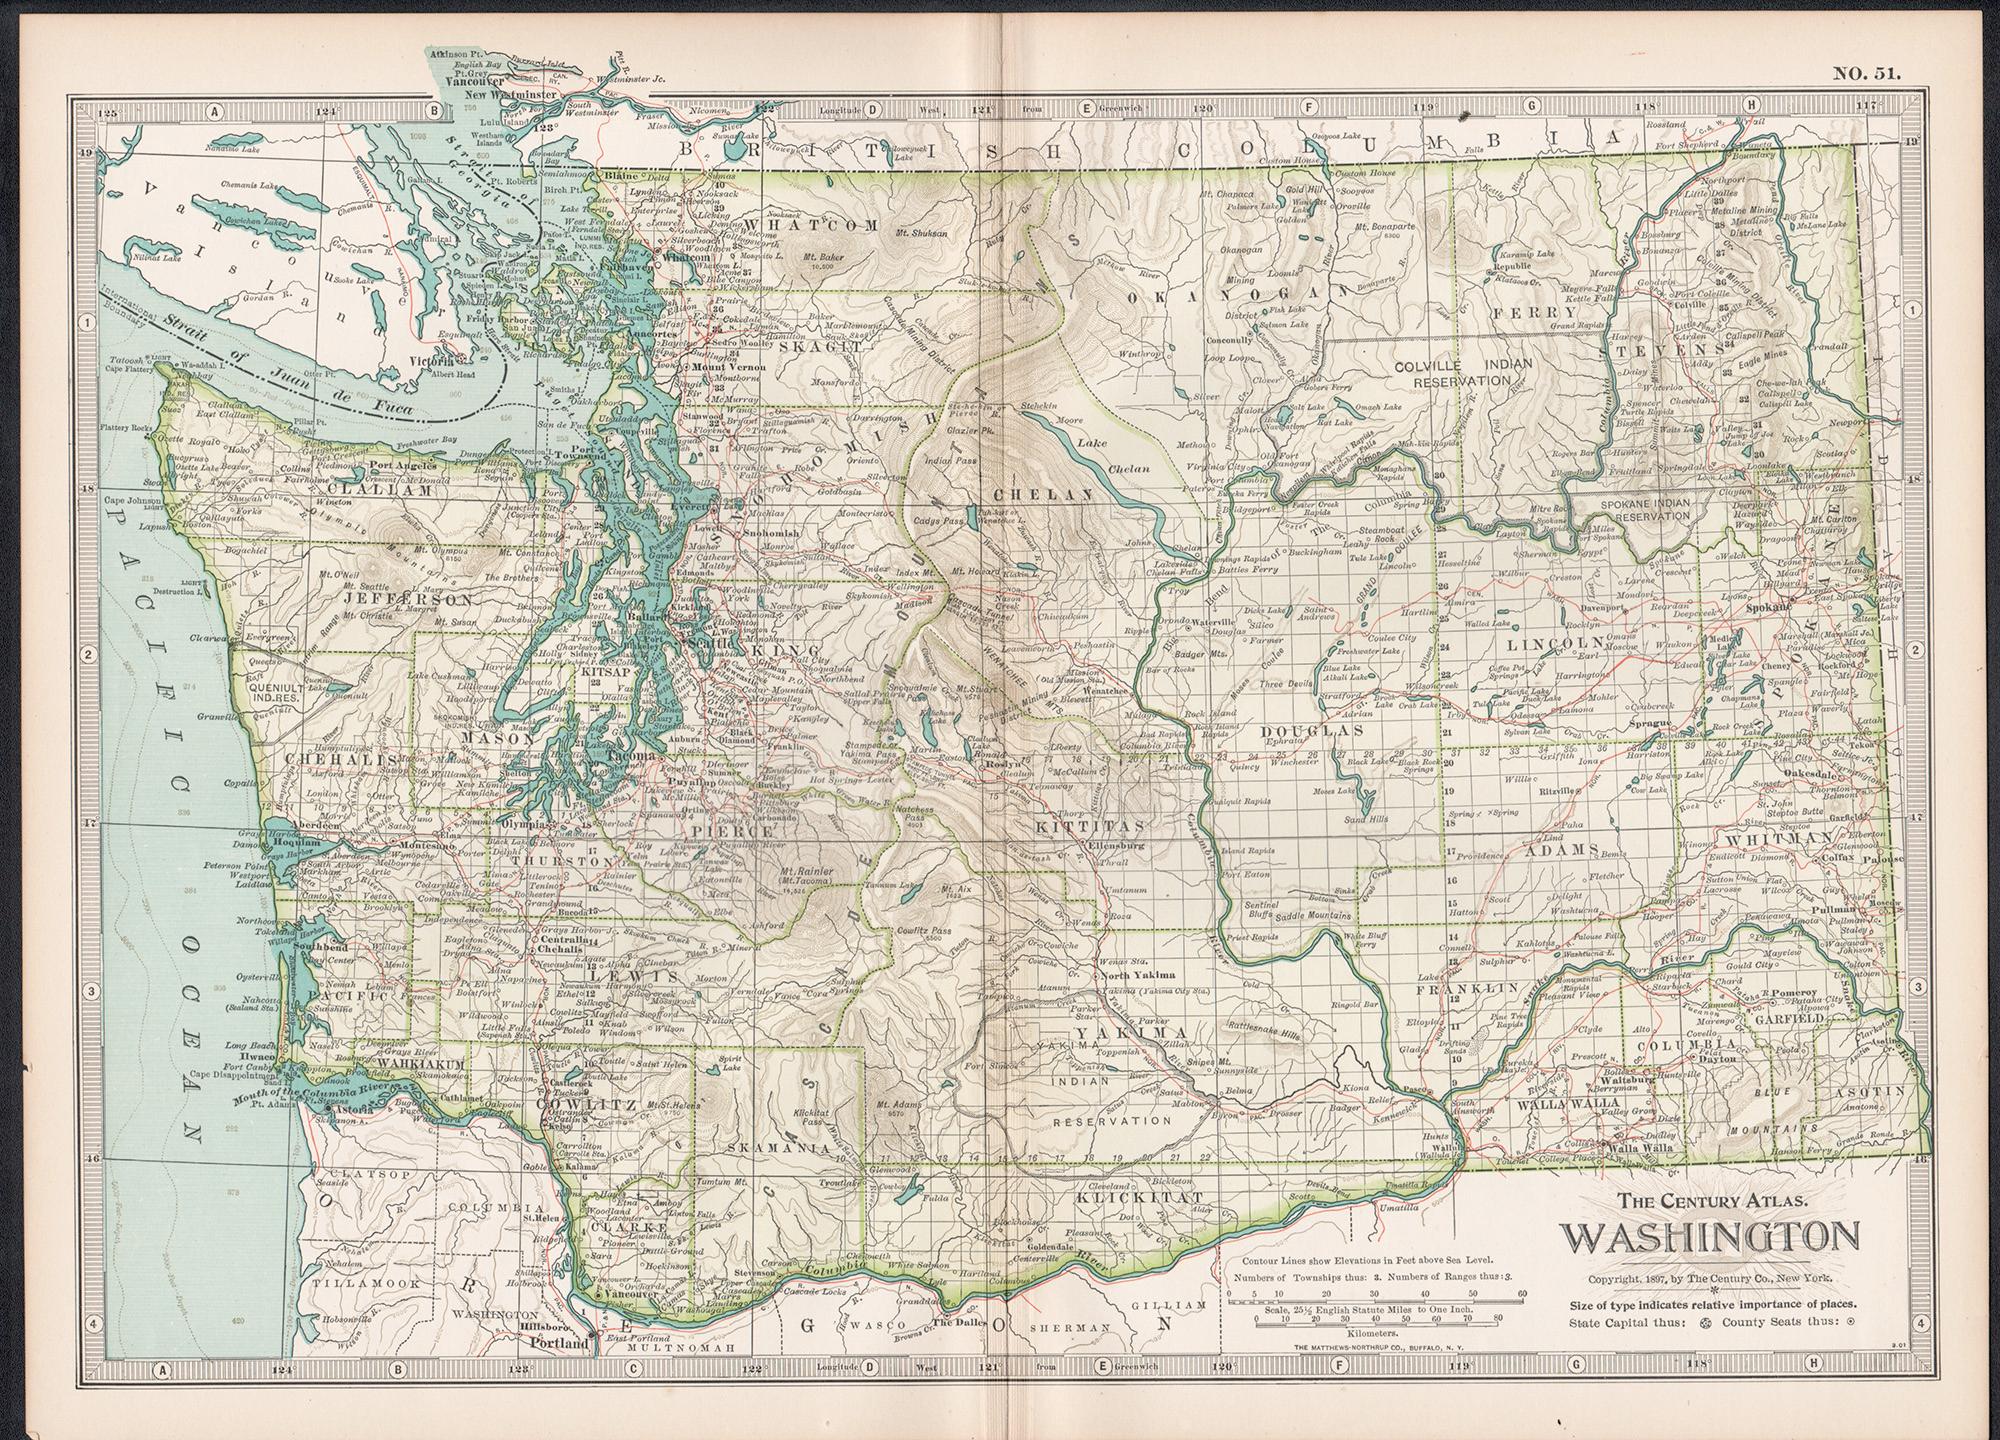 Washington. USA. Century Atlas state antique vintage map - Print by Unknown